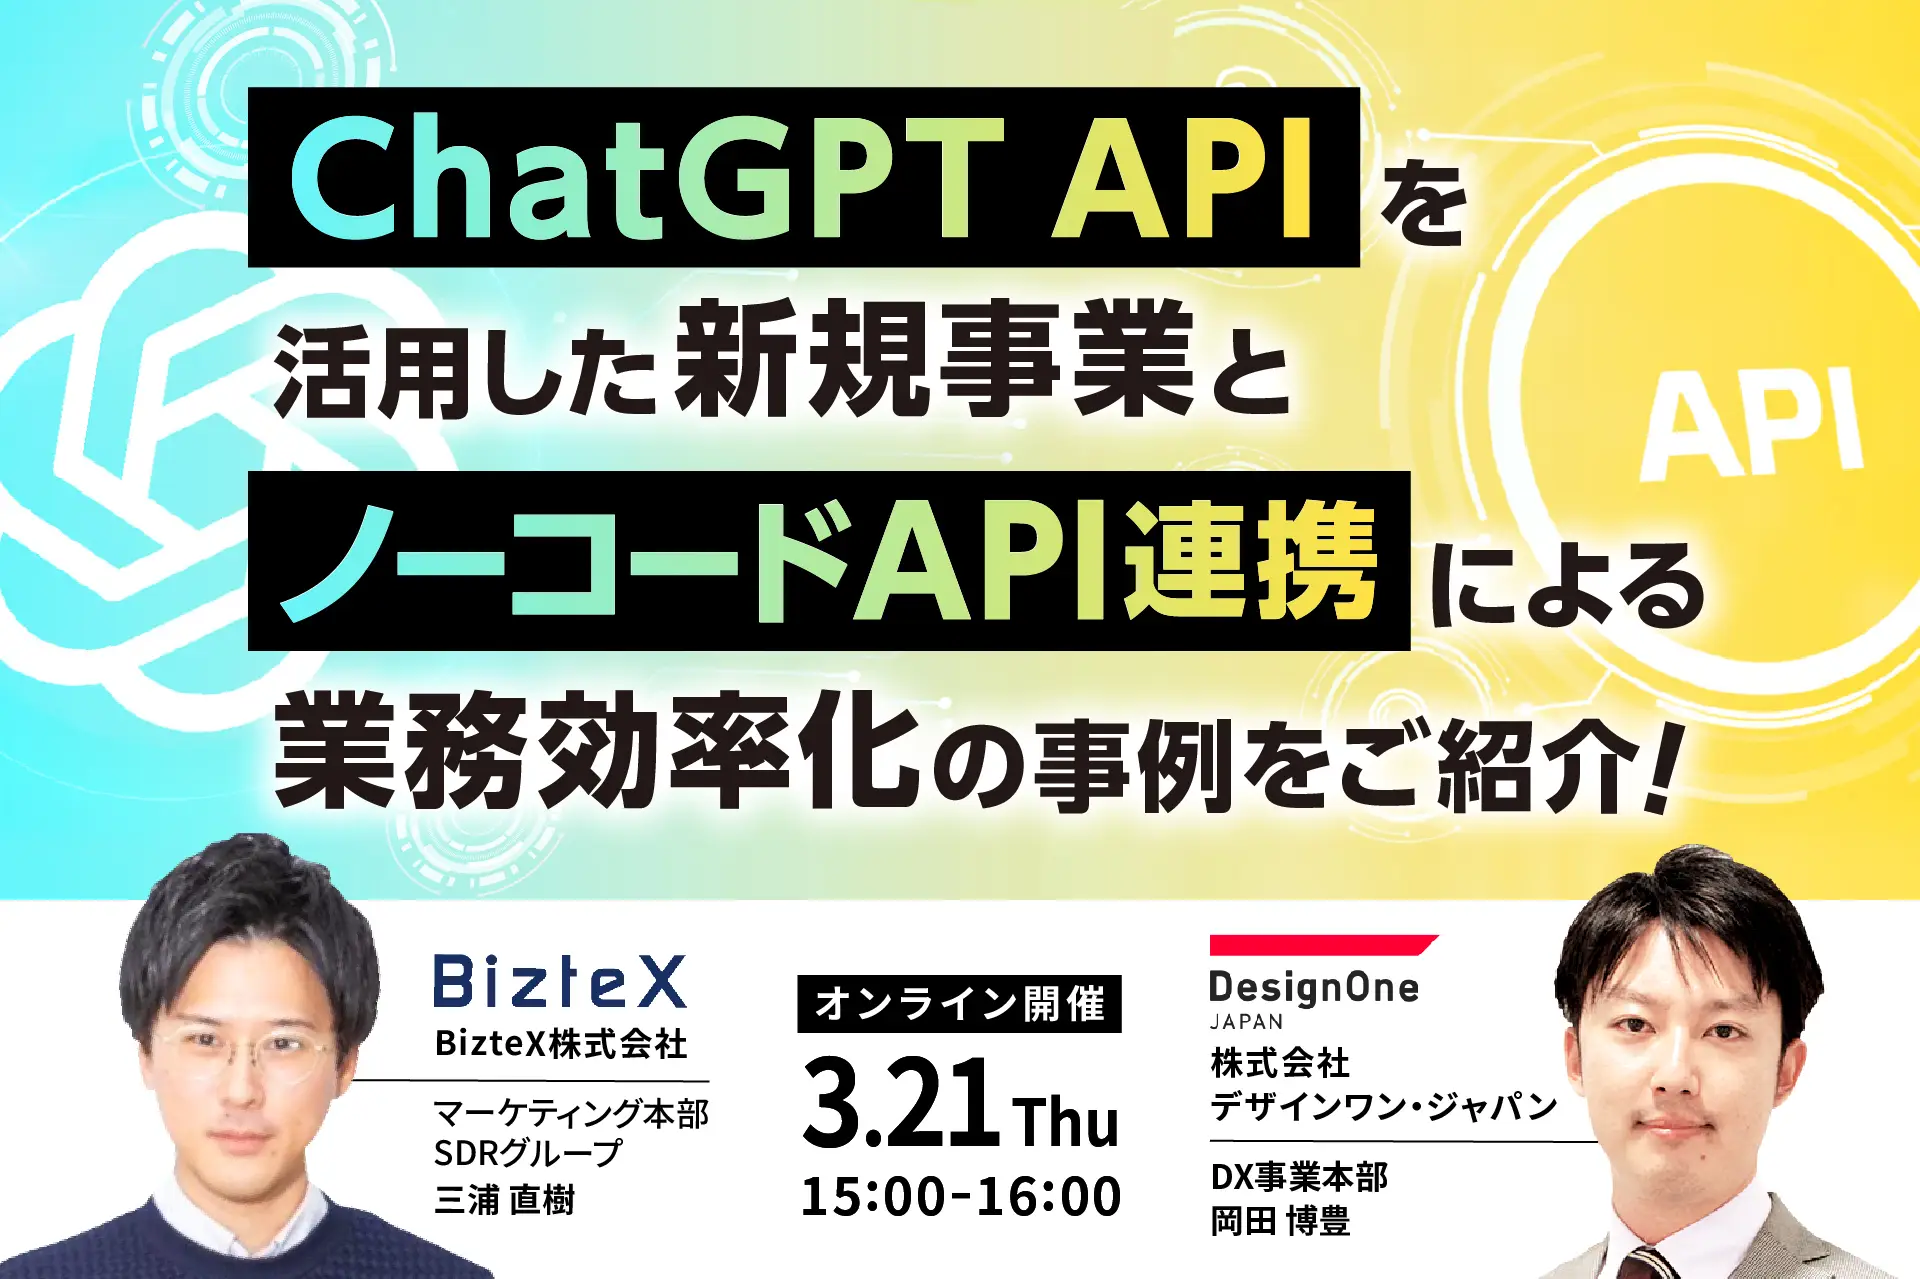 ChatGPT APIを活用した新規事業とノーコードAPI連携による業務効率化の事例をご紹介！